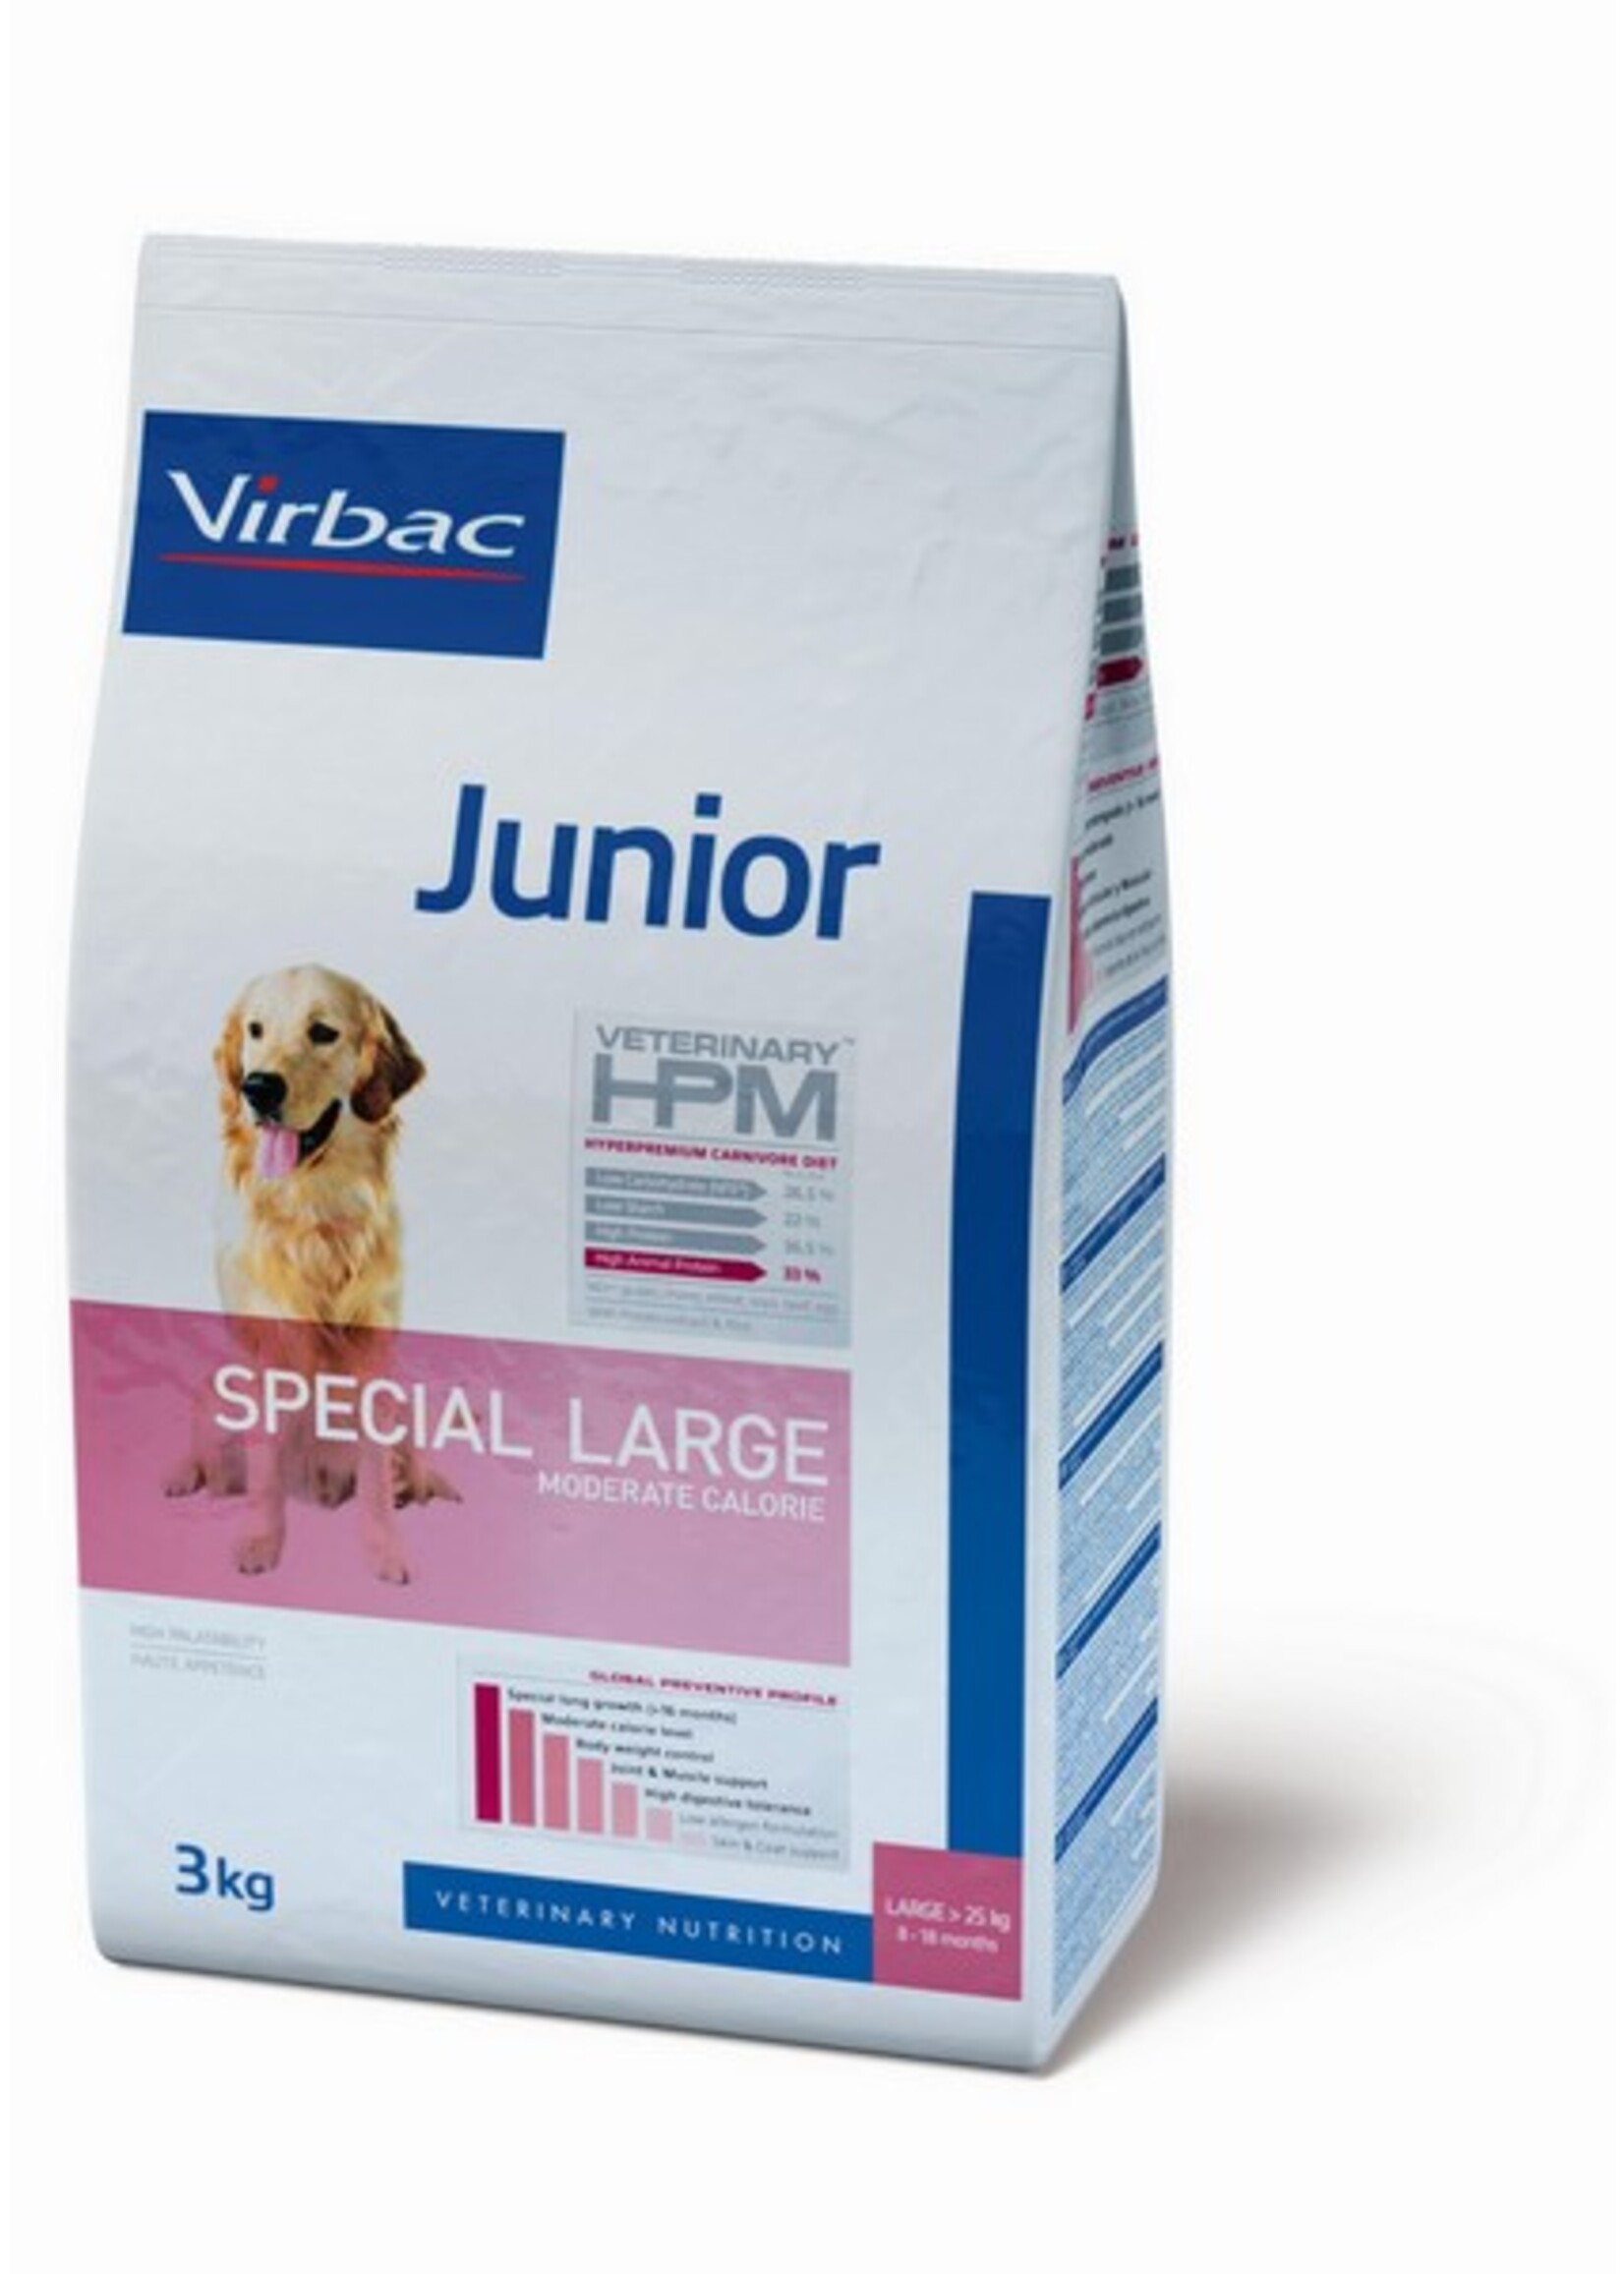 Virbac Virbac Hpm Dog Special Large Junior 3kg